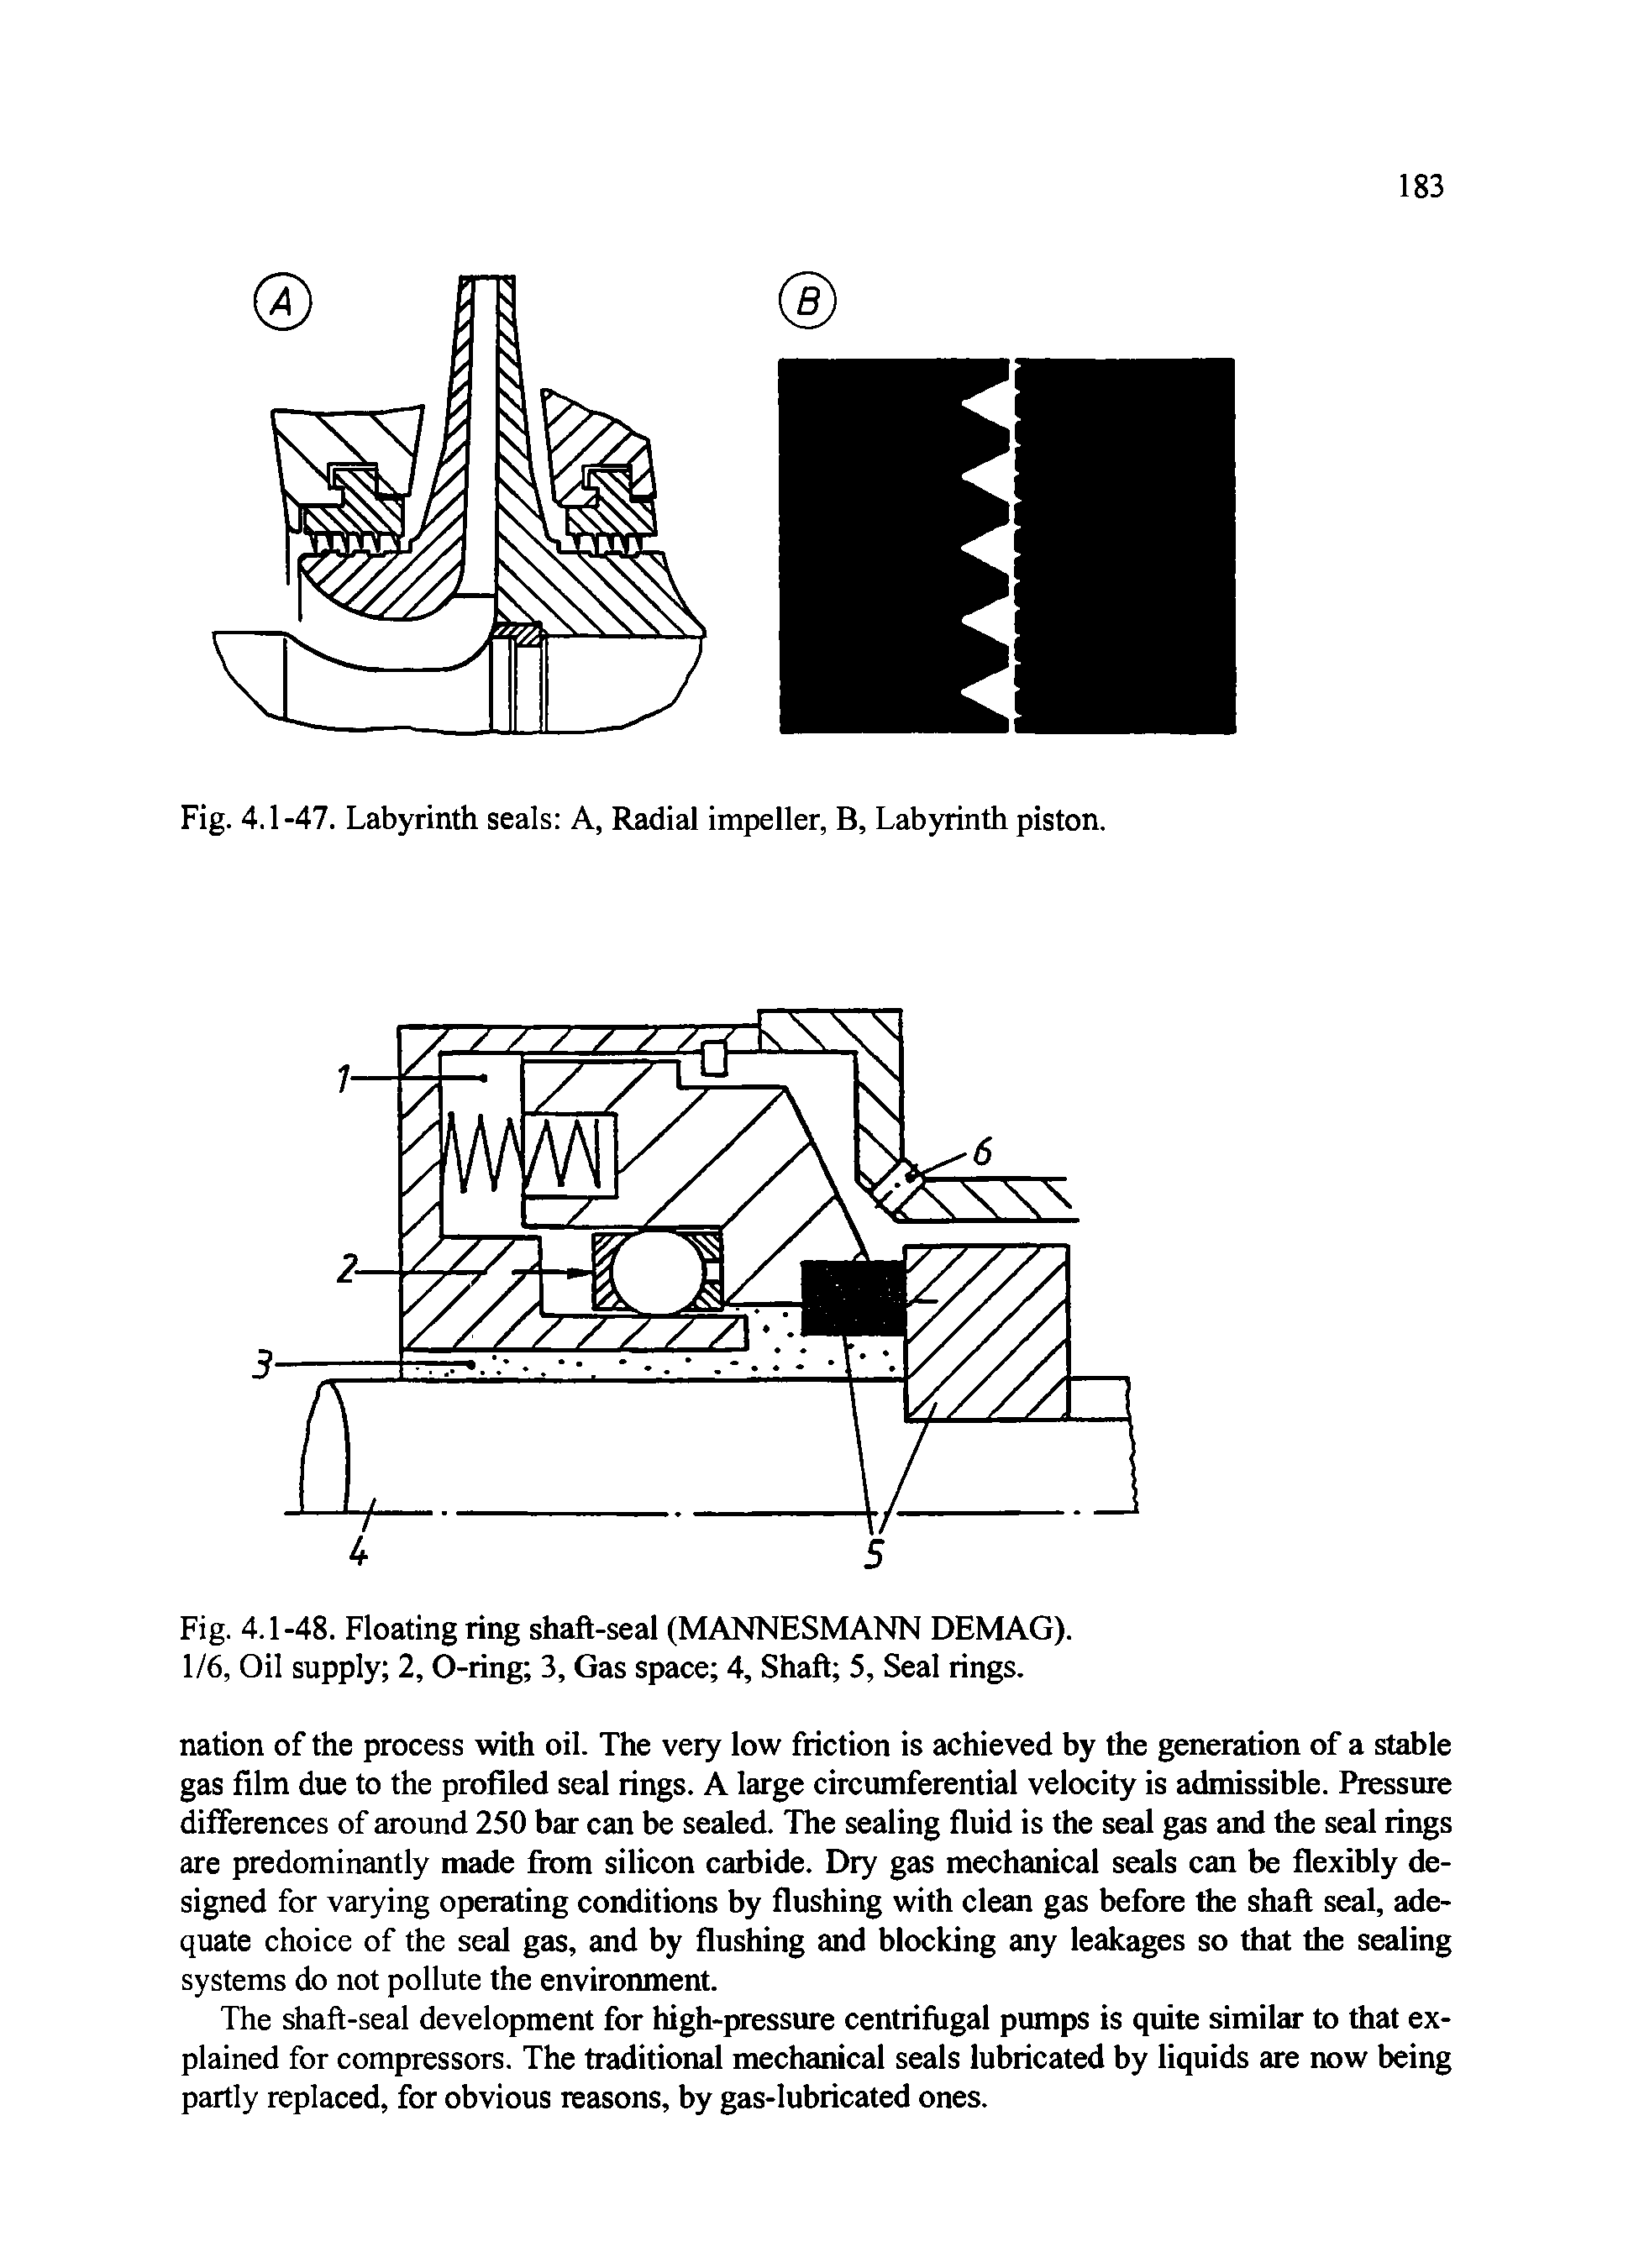 Fig. 4.1-47. Labyrinth seals A, Radial impeller, B, Labyrinth piston.